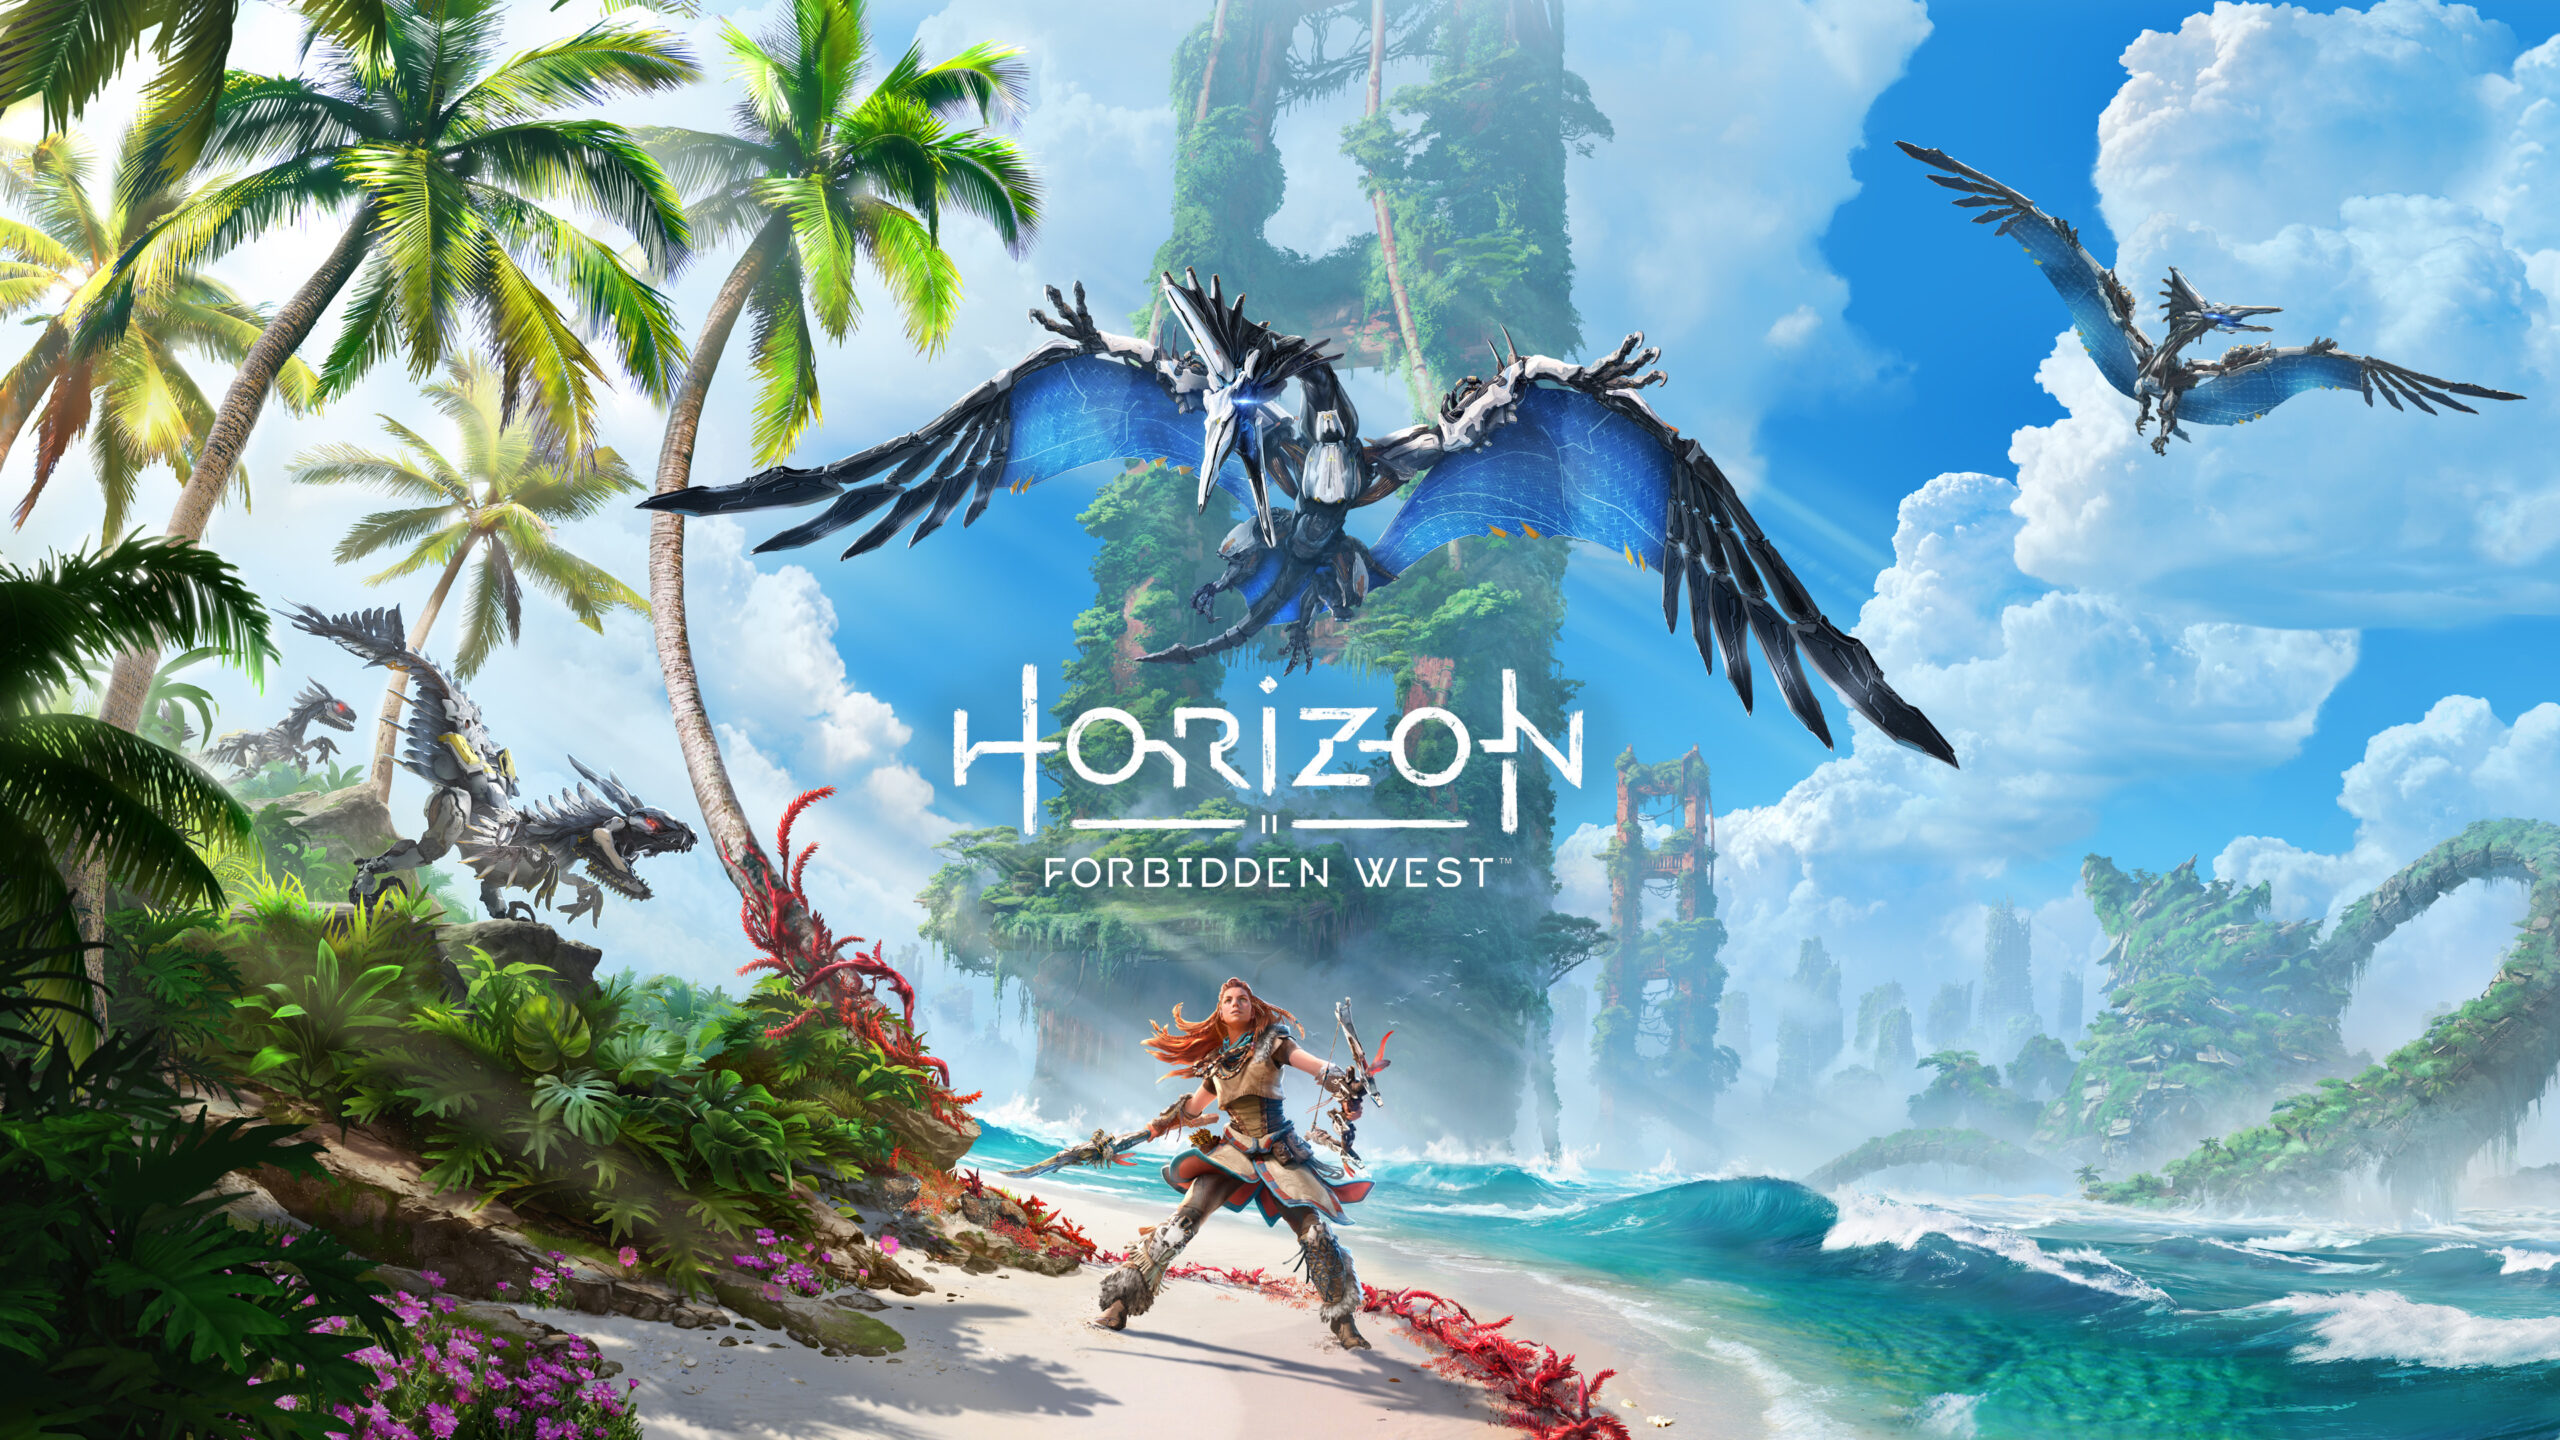 Horizon Forbidden West is getting a board game prequel